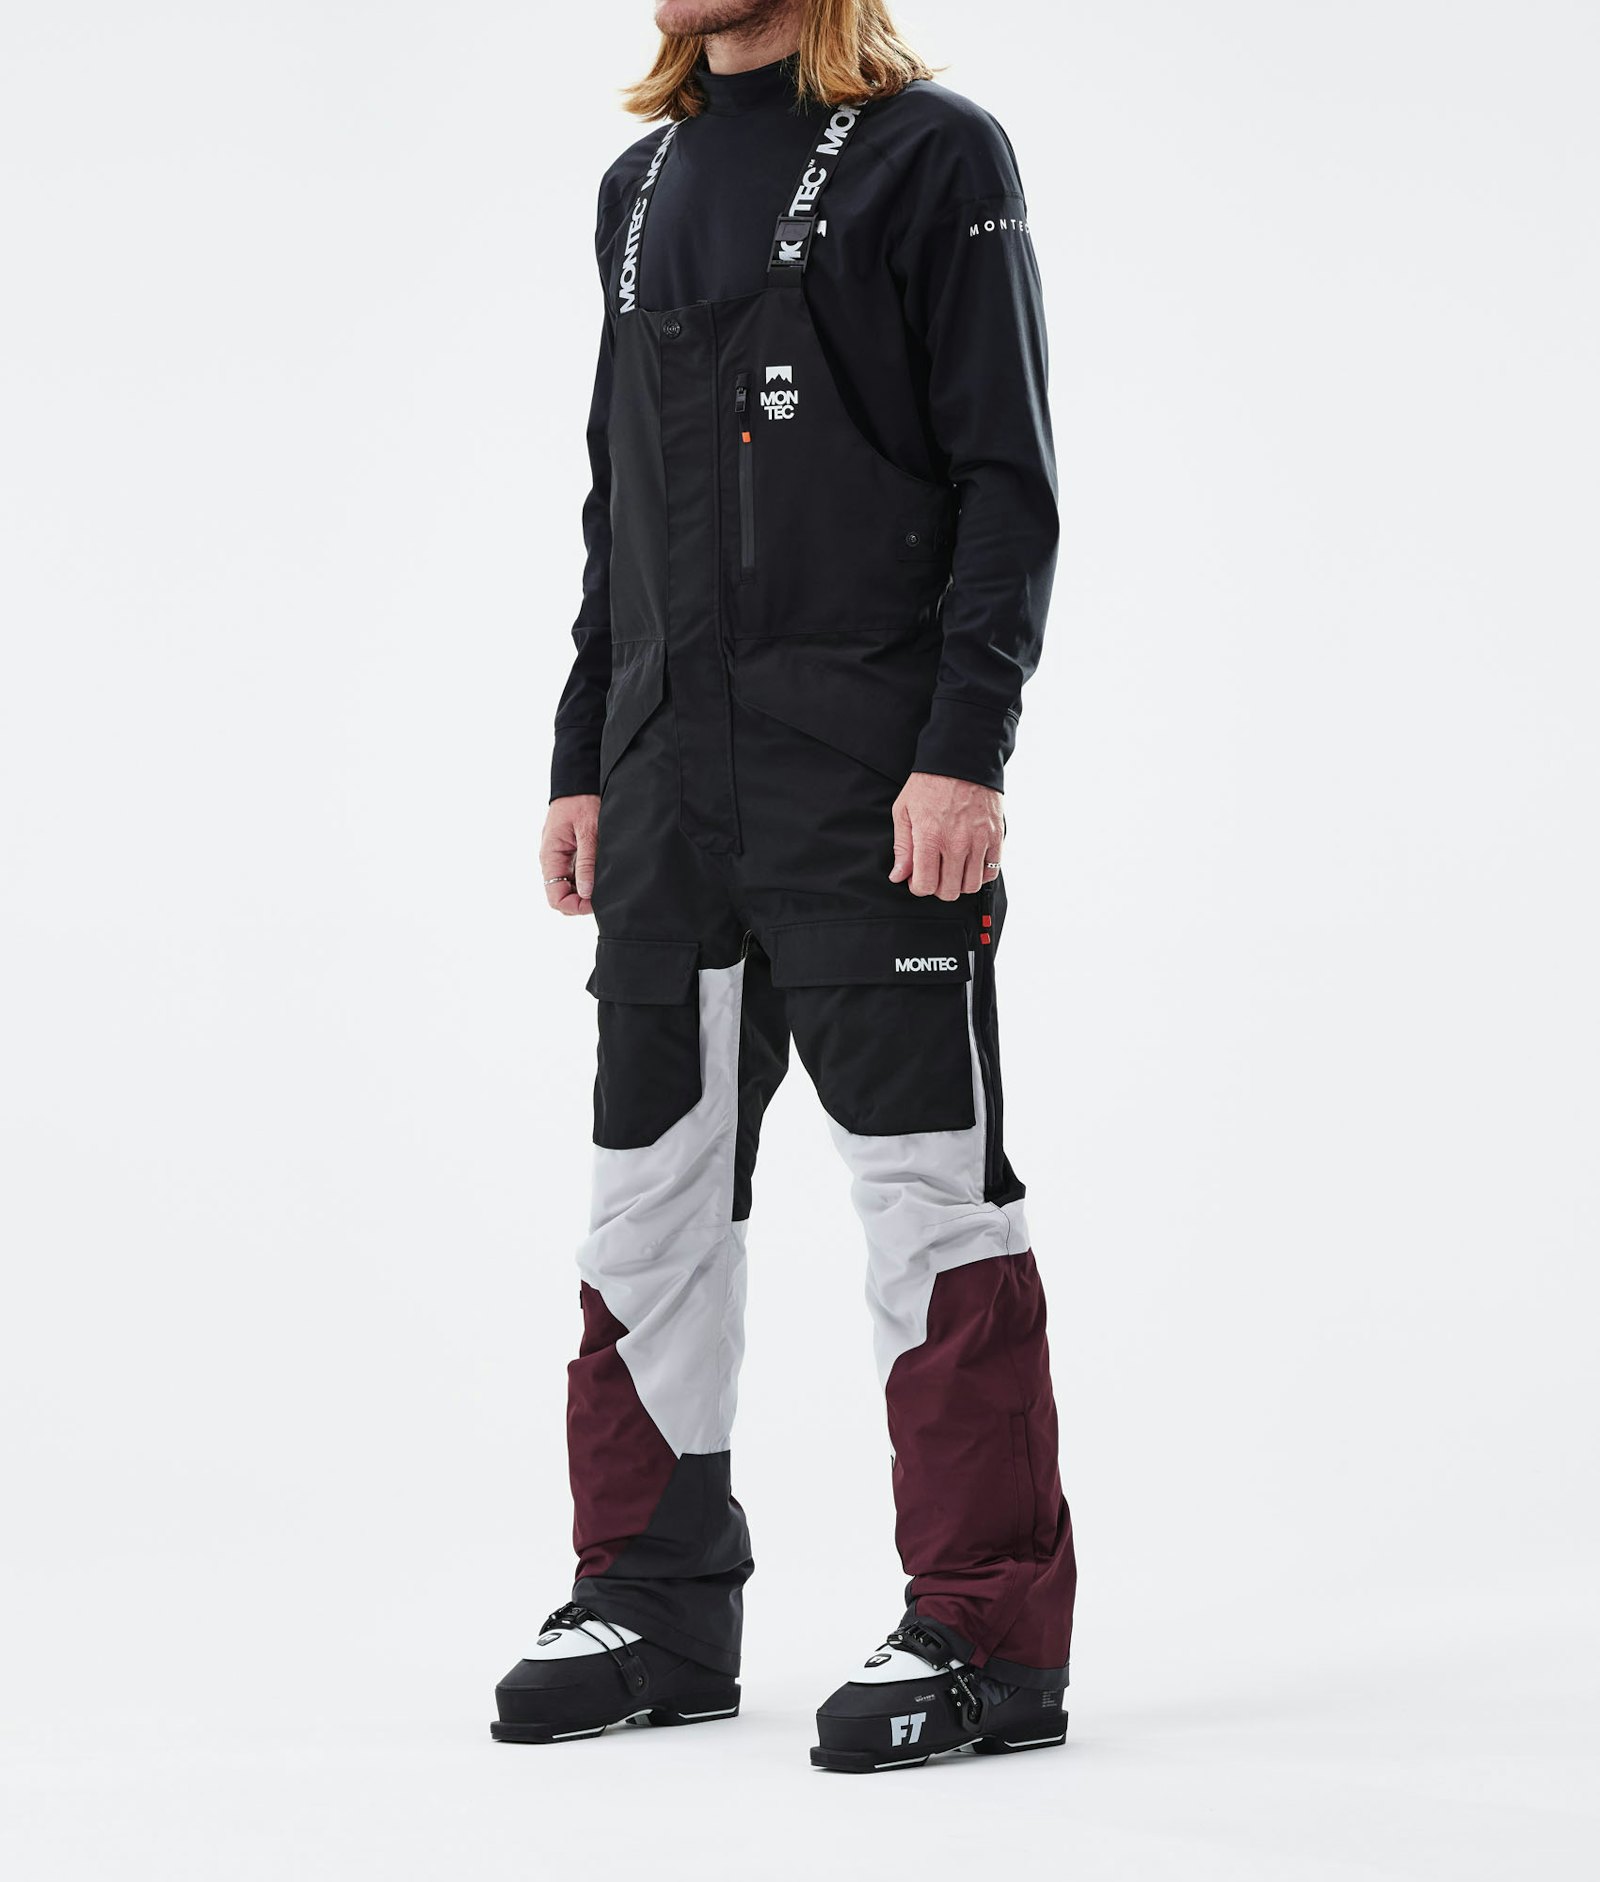 Fawk 2021 Pantalon de Ski Homme Black/Light Grey/Burgundy